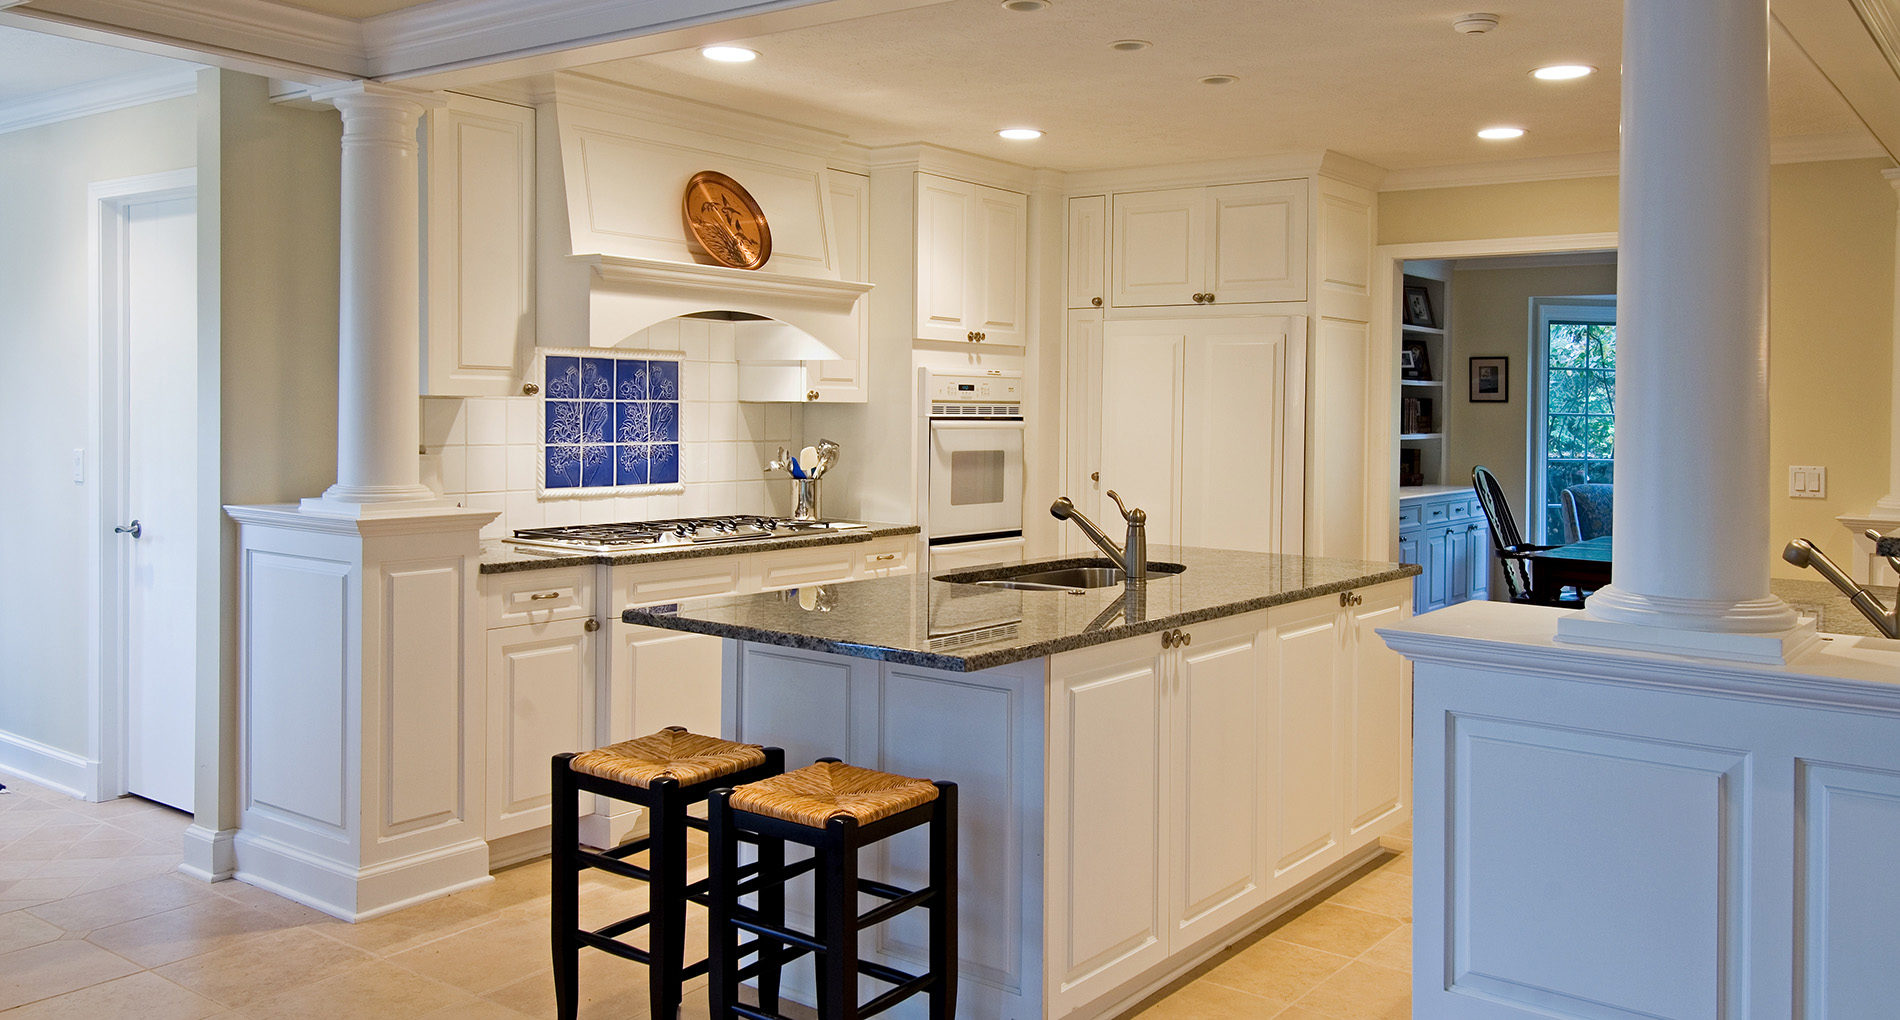 Solon Kitchen Remodel & Design | Alair Homes Solon